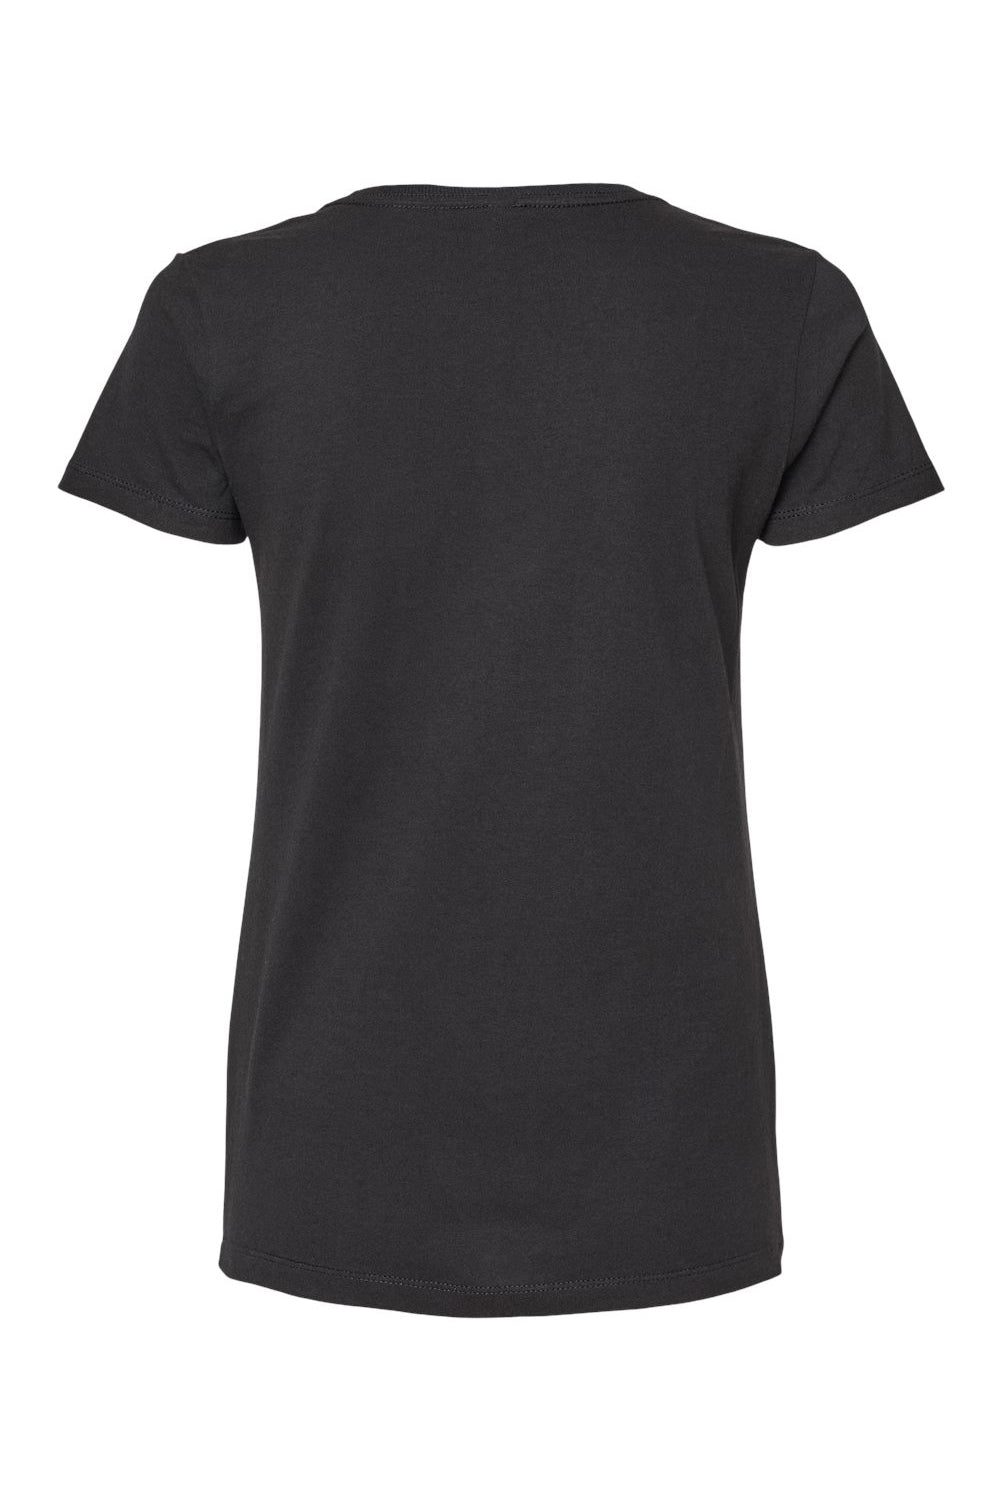 M&O 4810 Womens Gold Soft Touch Short Sleeve Crewneck T-Shirt Black Flat Back